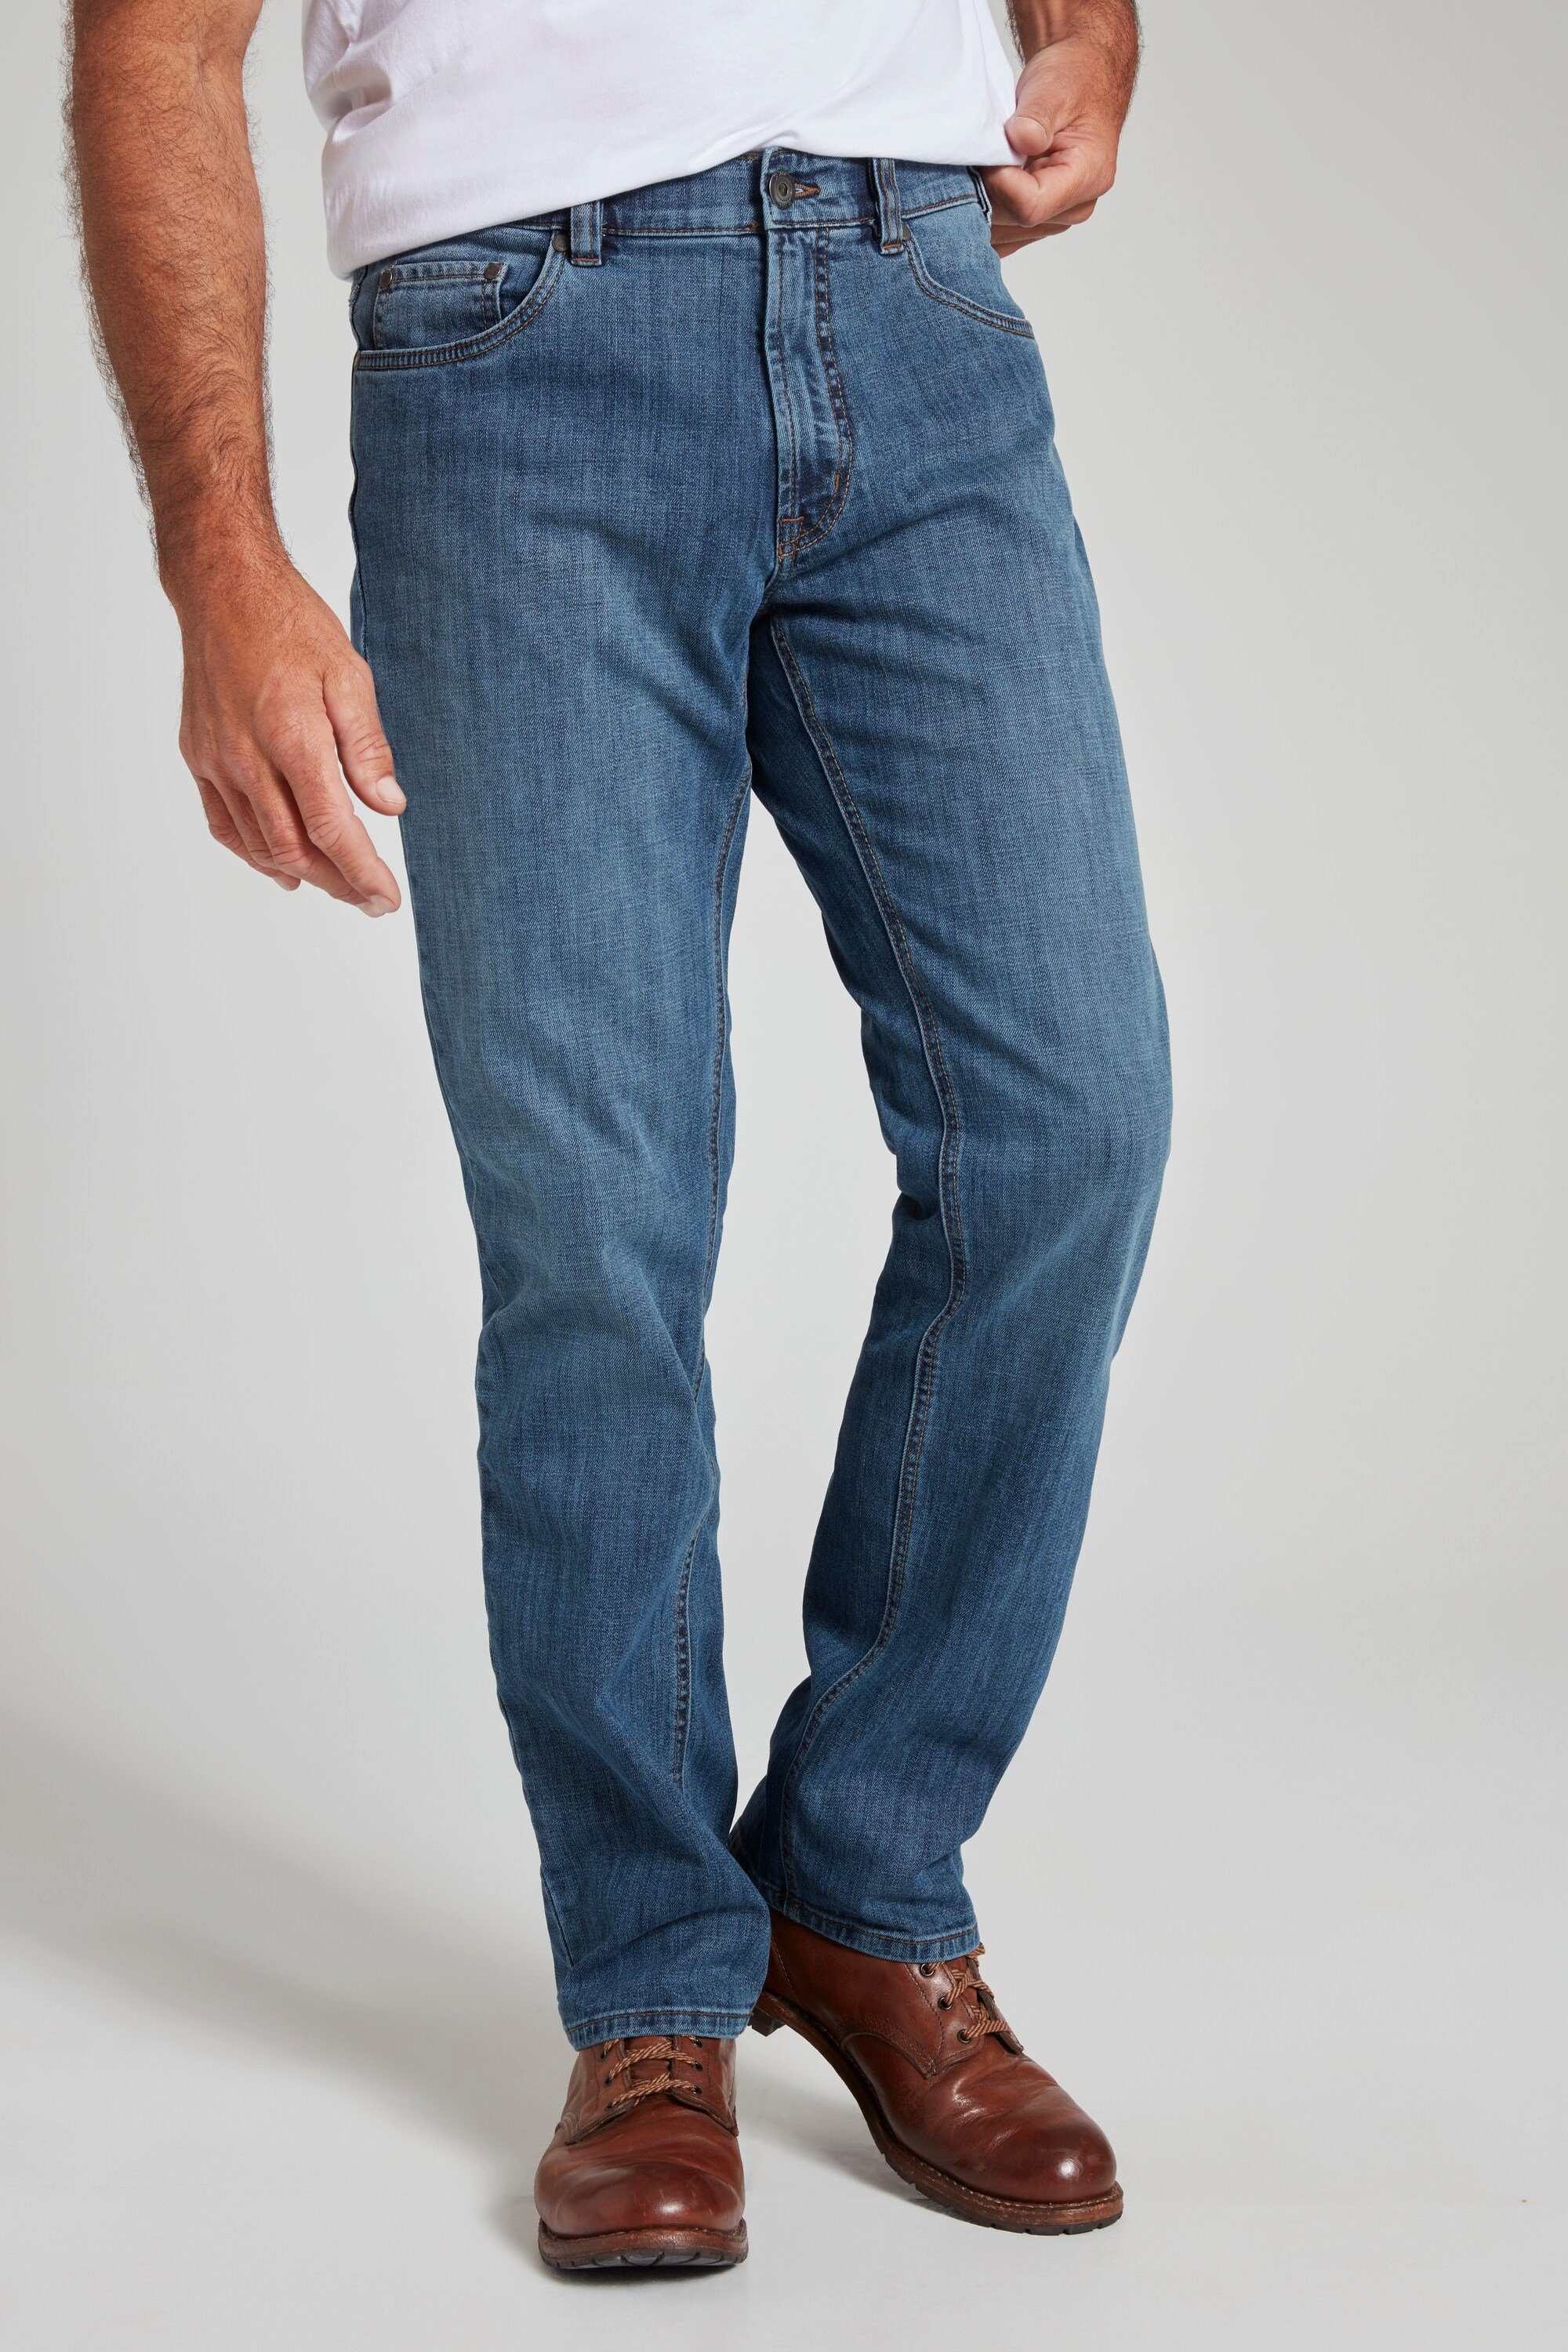 JP1880 Cargohose Jeans 5-Pocket elastischer Komfortbund Regular Fit blue denim | Cargohosen